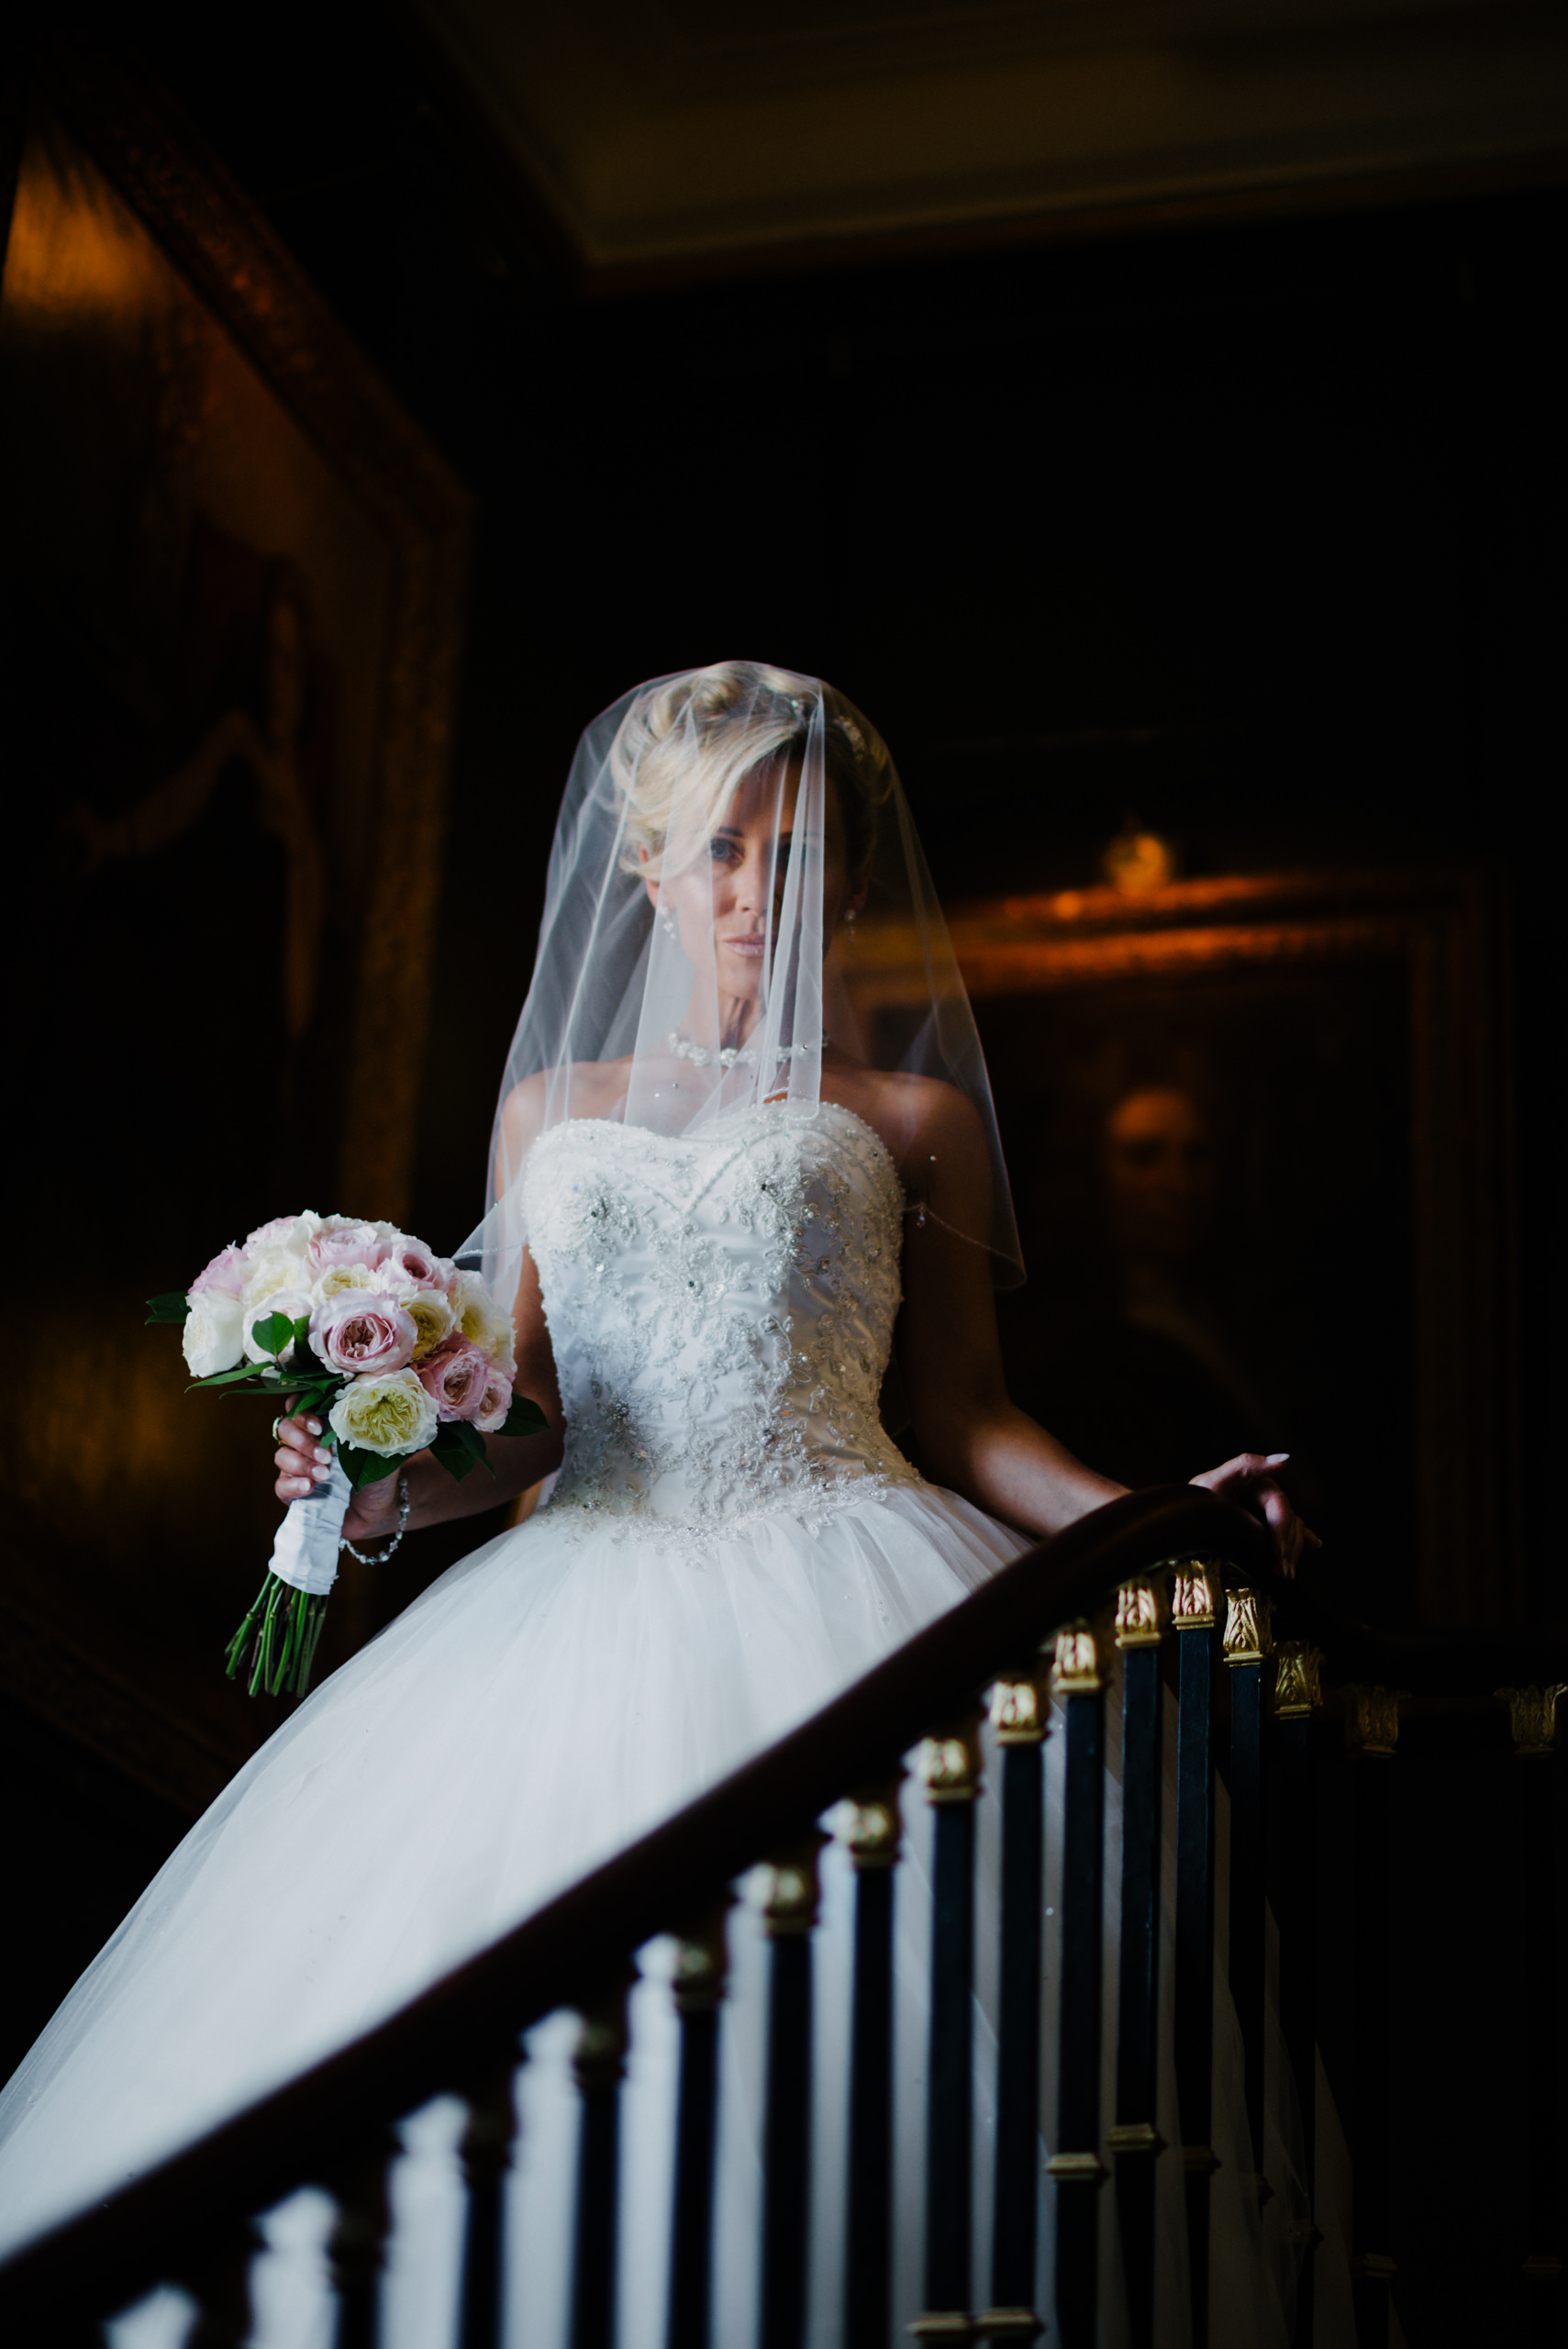 JAYE & LEE WEDDING PHOTOGRAPHY AT STUBTON HALL